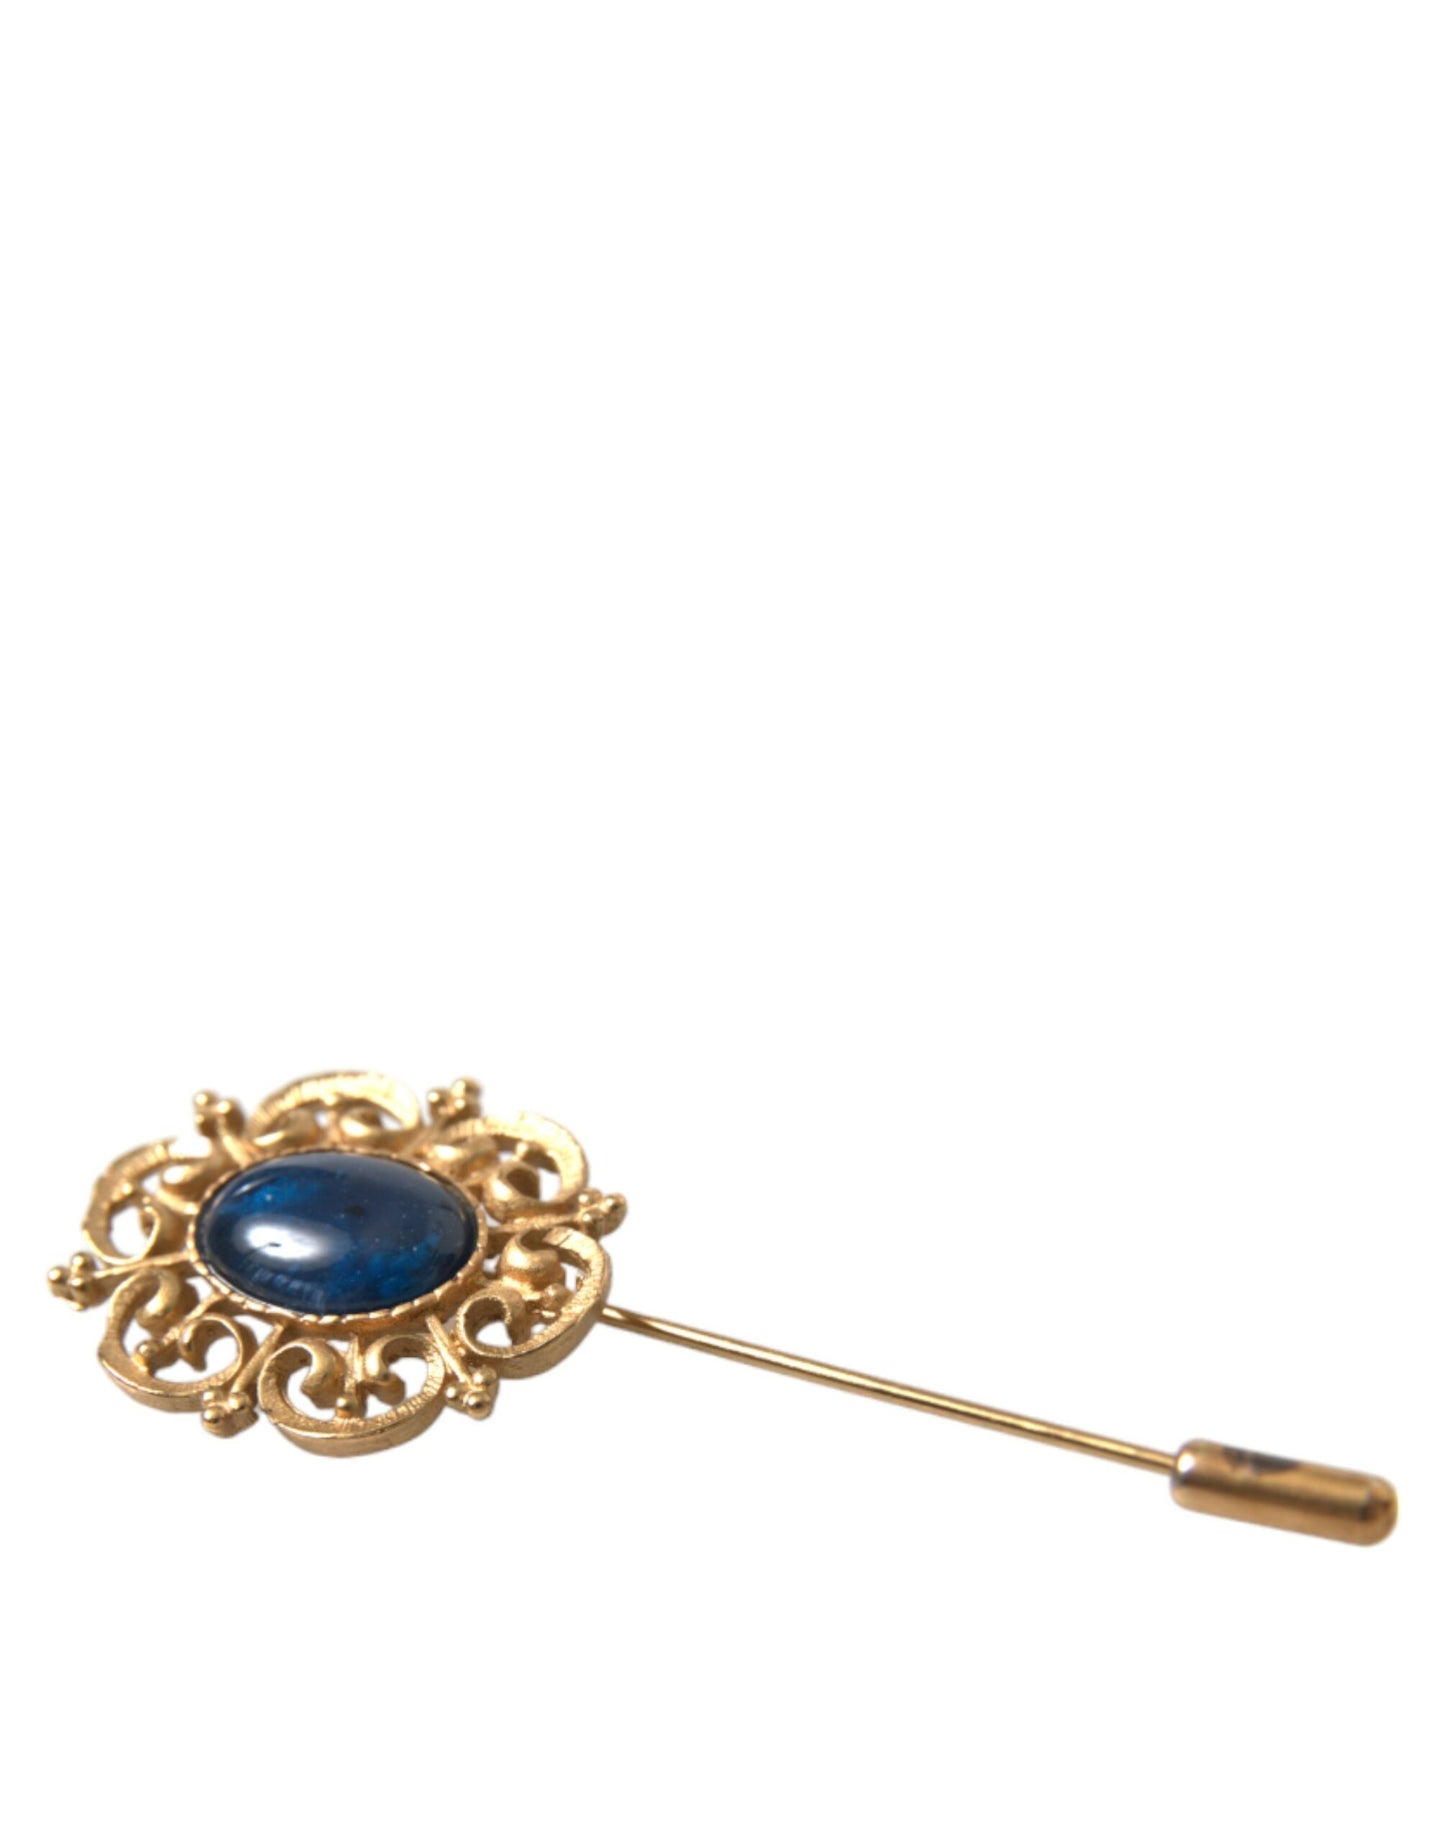 Elegant Gold Tone Silver Pin Brooch